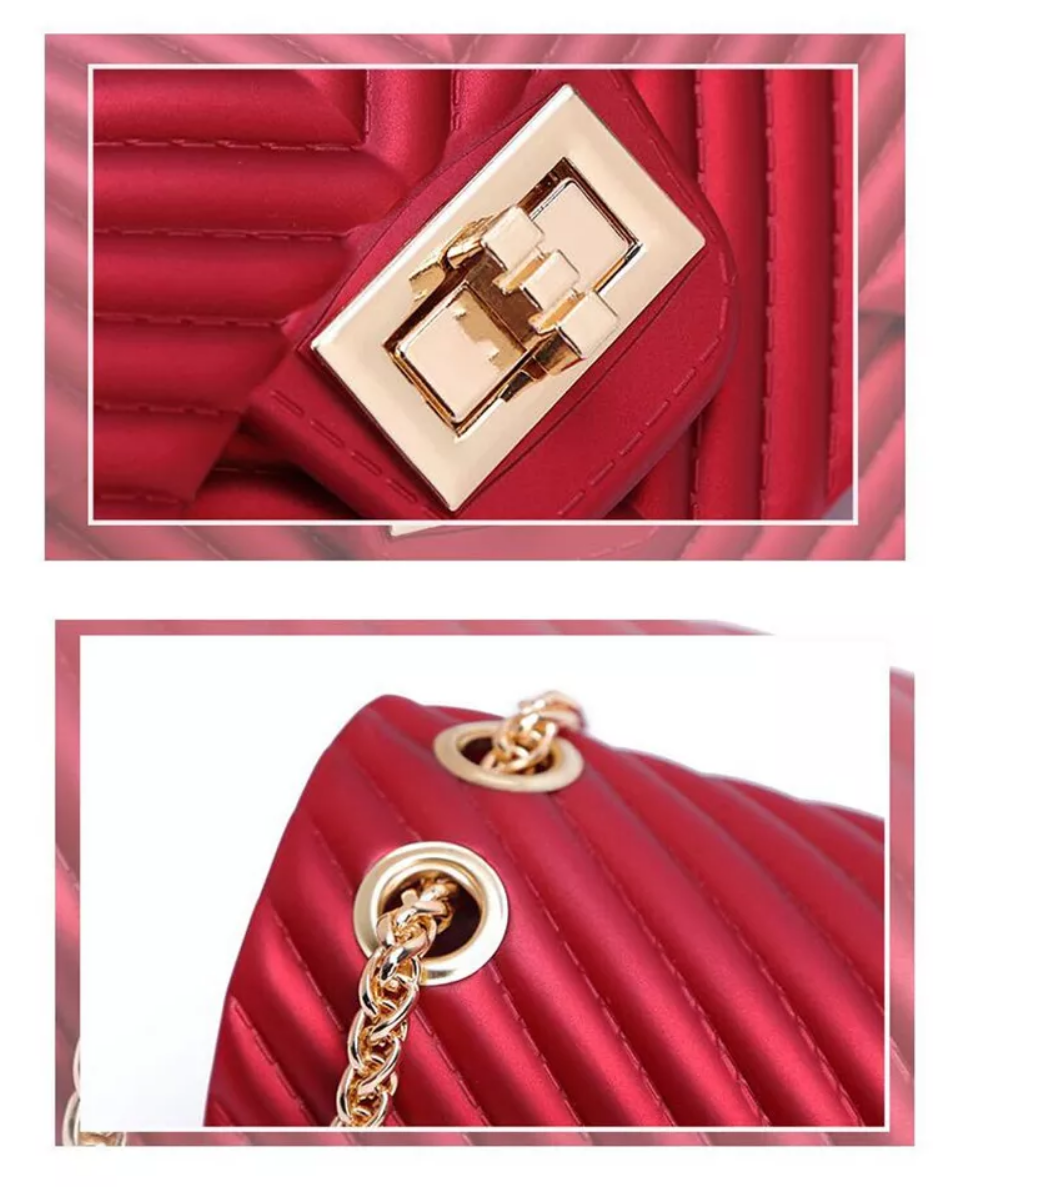 Cute Clutch Purses Ladies Single Bag Shoulder Female Women Jelly Luxury Handbags with Chain